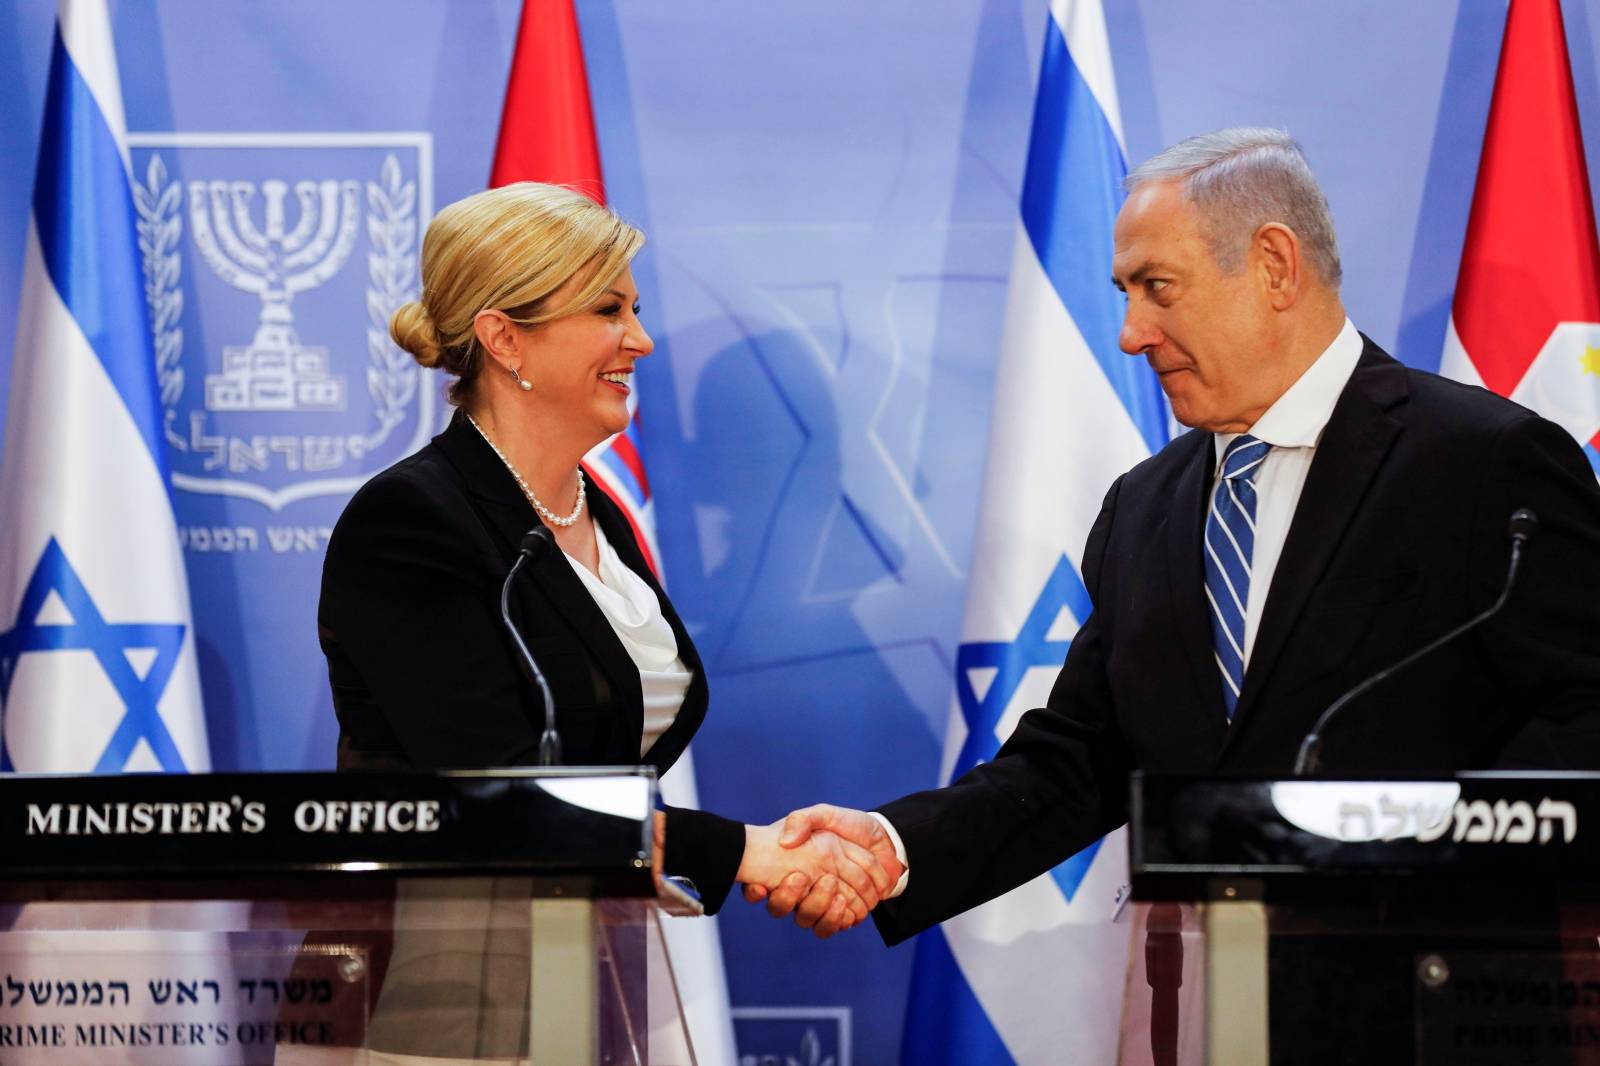 Israeli Prime Minister Benjamin Netanyahu shakes hands with Croatia's President Kolinda Grabar-Kitarovic as they hold a joint news conference in Jerusalem